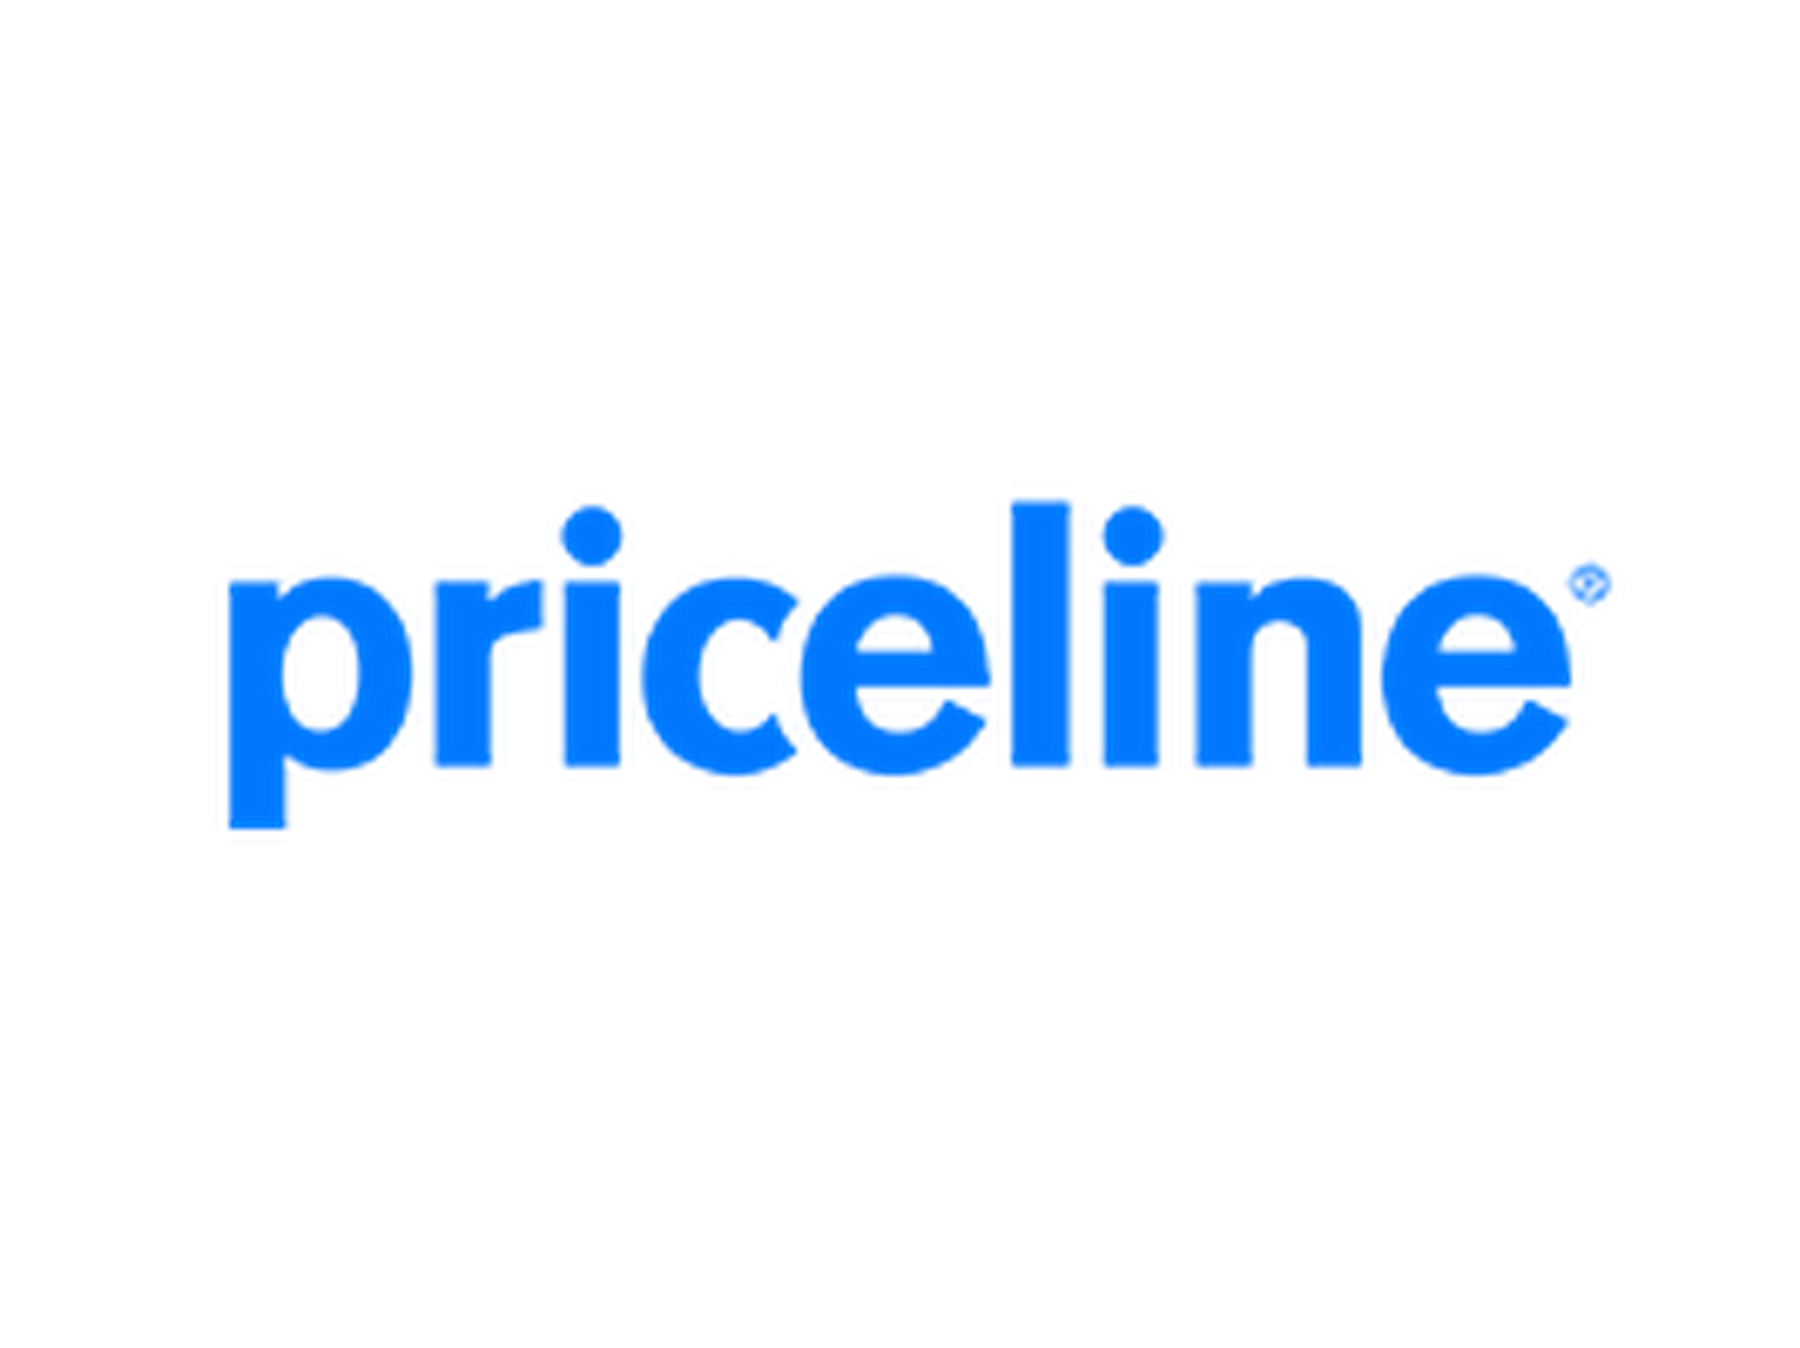 Priceline Promo Codes